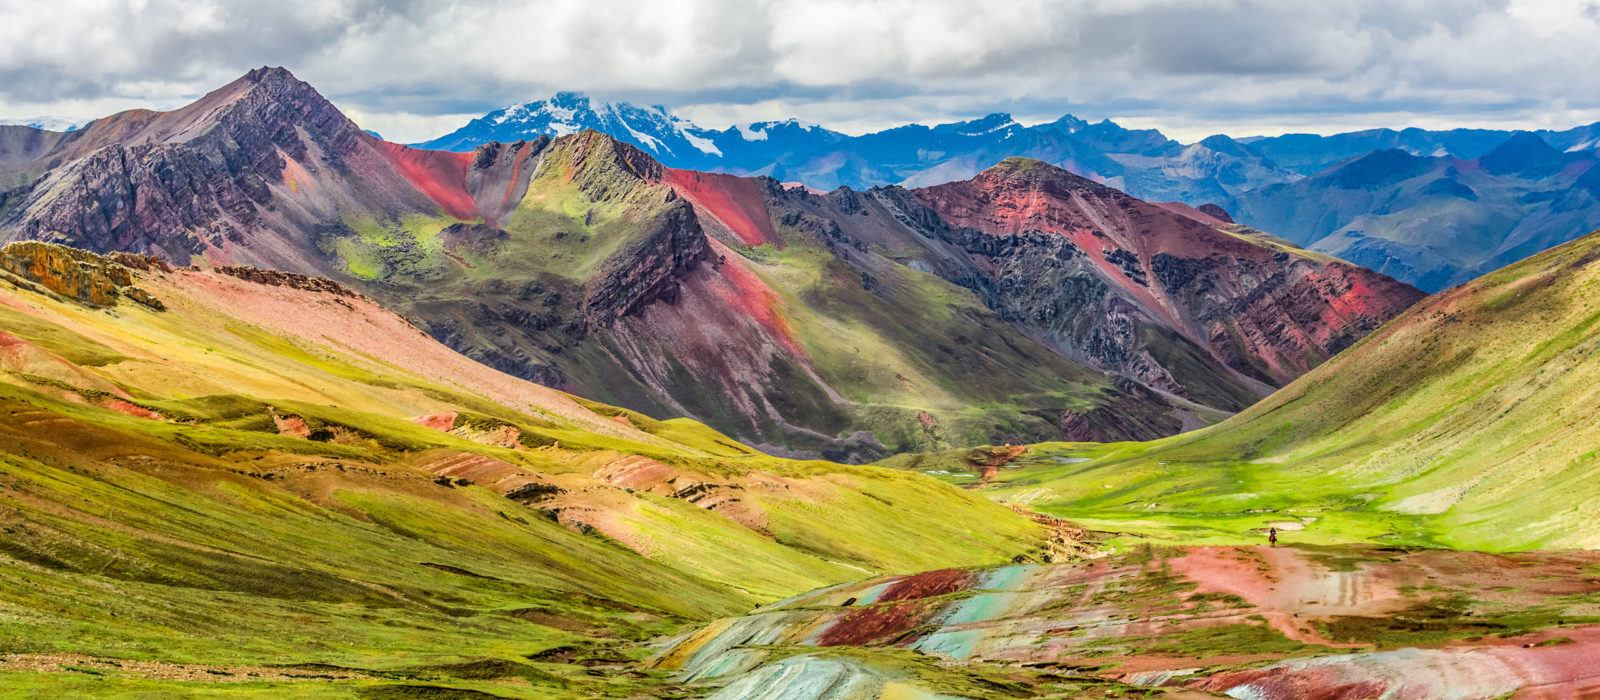 vinicuna-rainbow-mountain-peru